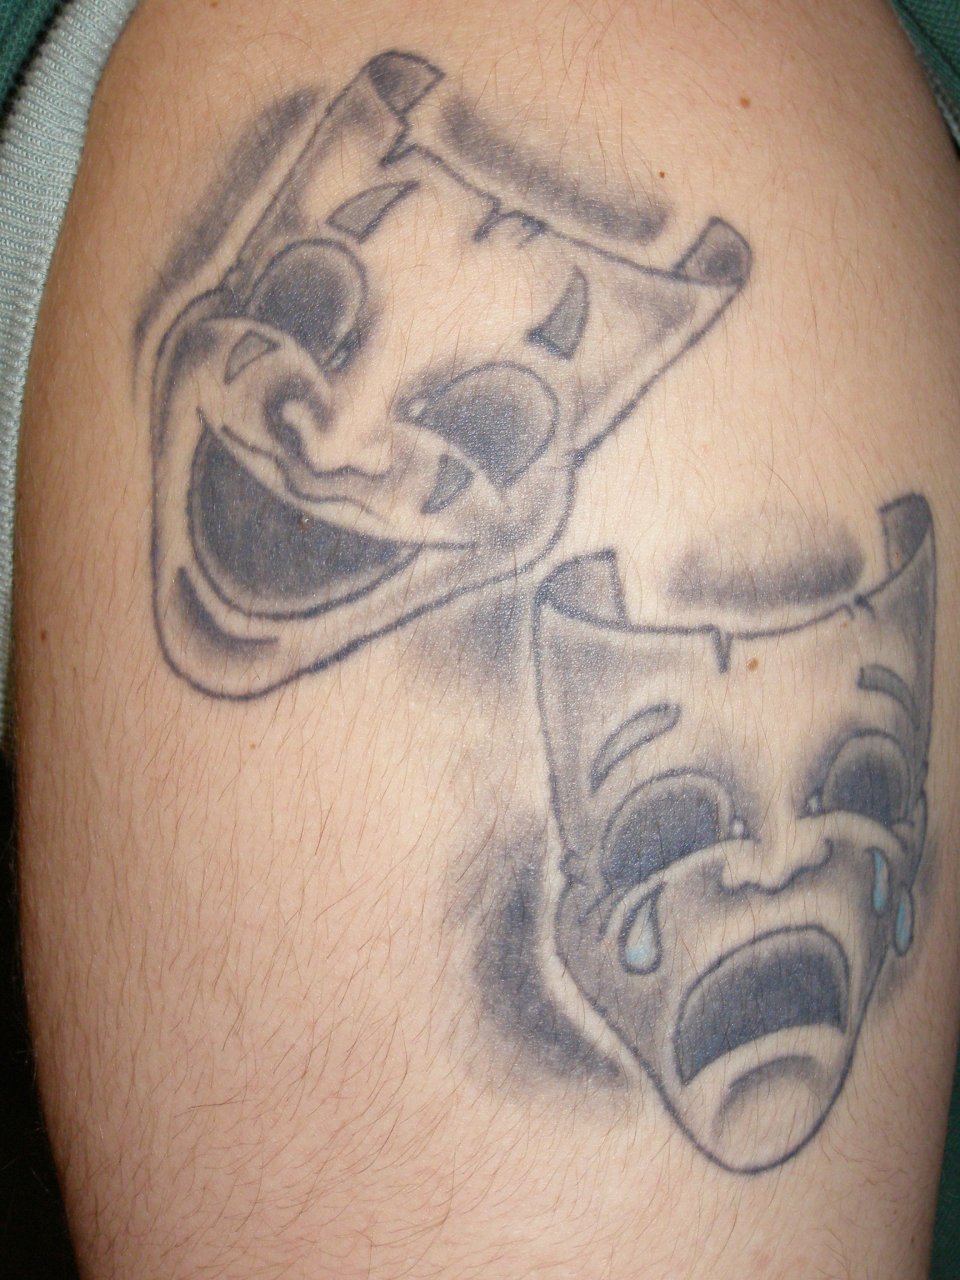 Wylde Sydes Tattoo  Body Piercing on X Smile Now  Cry Later Comedy   Tragedy Masks By Jesus httpstco3UZuHLgjvj tattoo wyldesydestattoo  smilenowcrylatertattoo sandiegotattooartist blackandgraytattoo  comedytragedymasks httpstco 